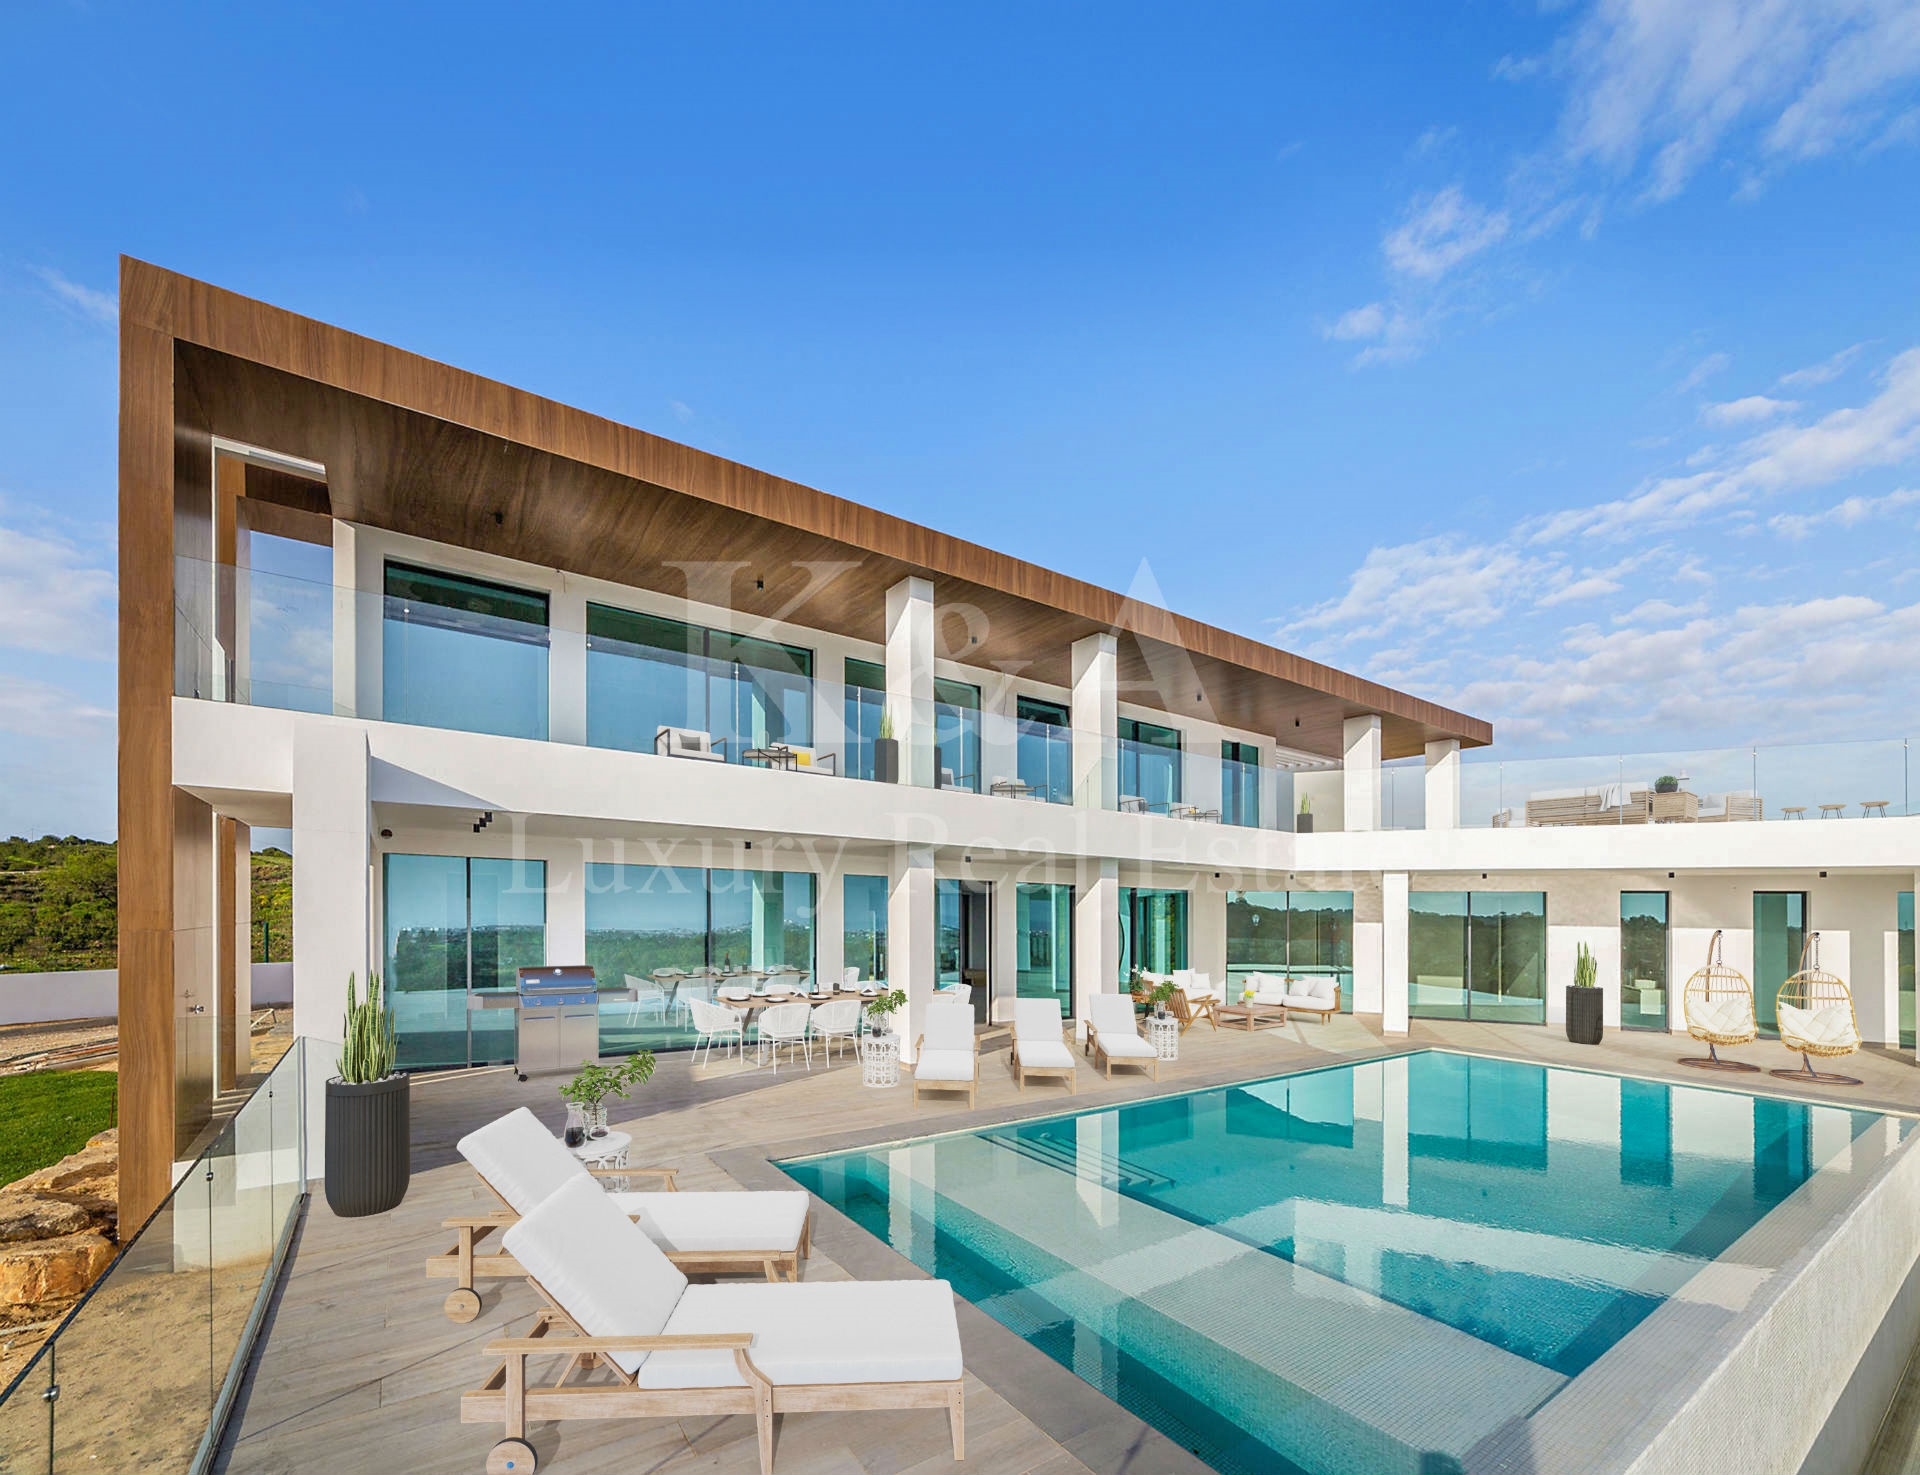 6 Bedroom Villa in an exclusive golf resort with panoramic ocean views,  Algarve